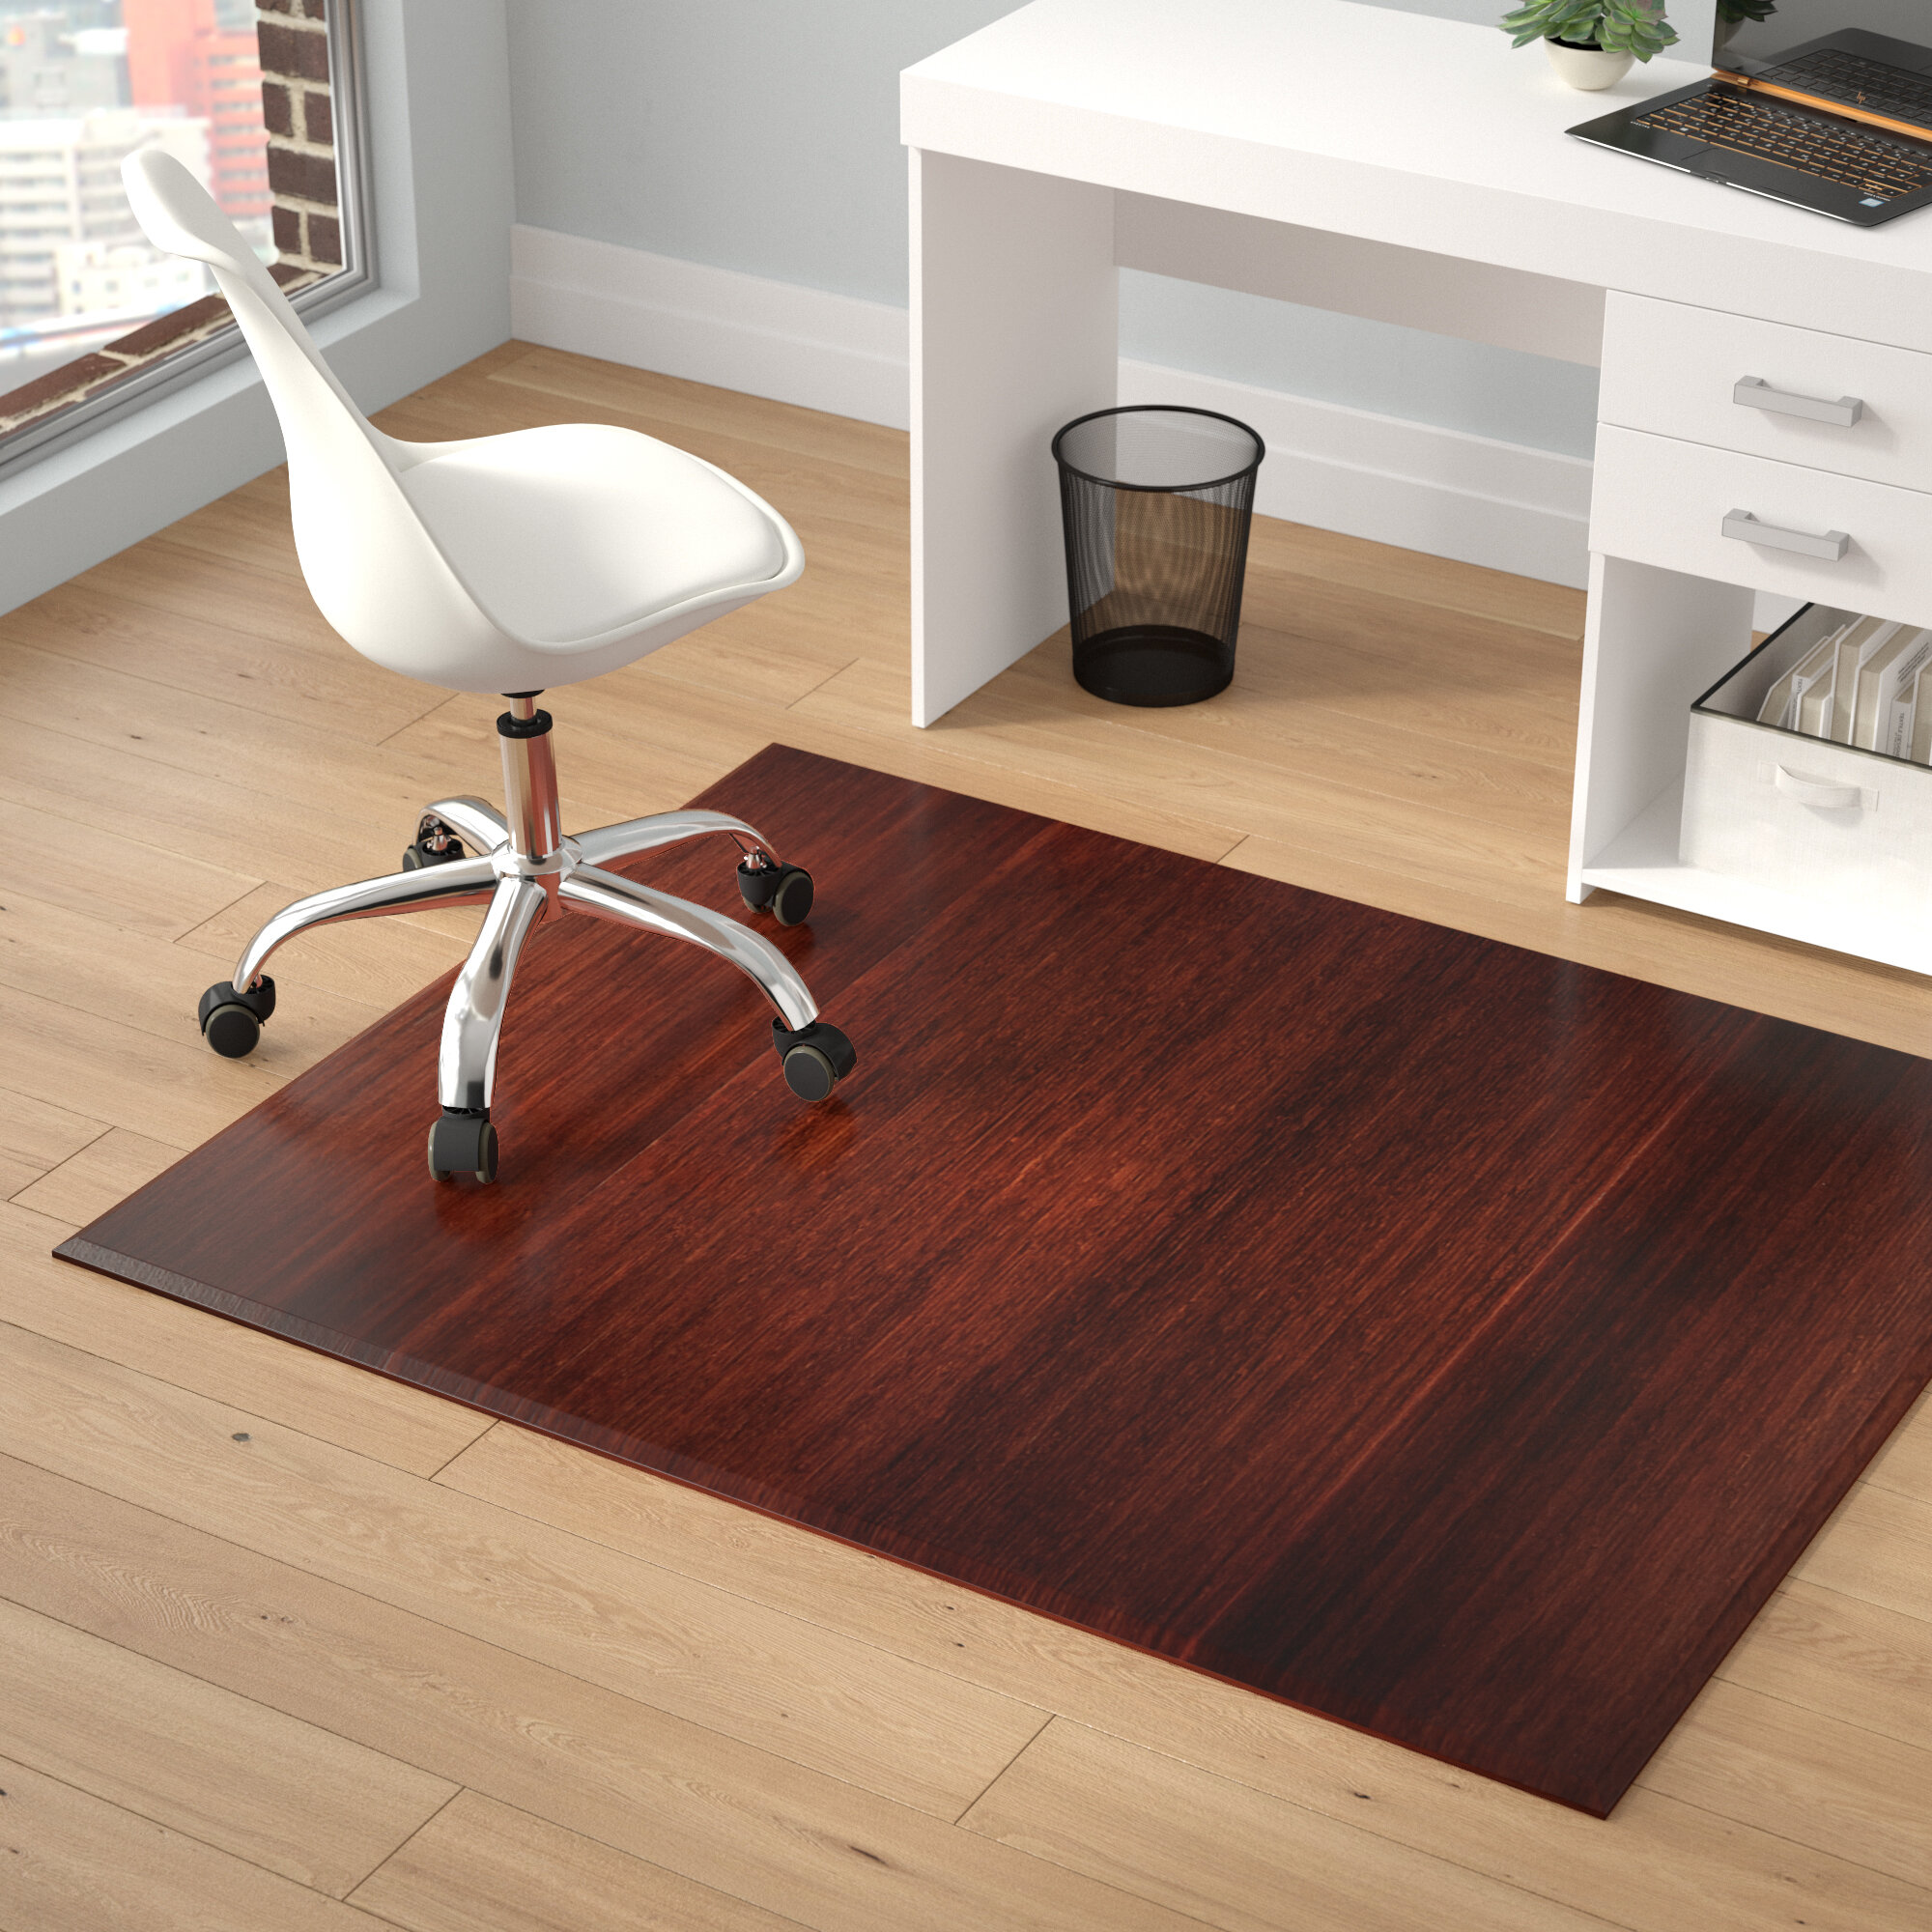 35X47 Inches Straight Edge Rectangular Stur Office Chair Mat For Hardwood Floor 